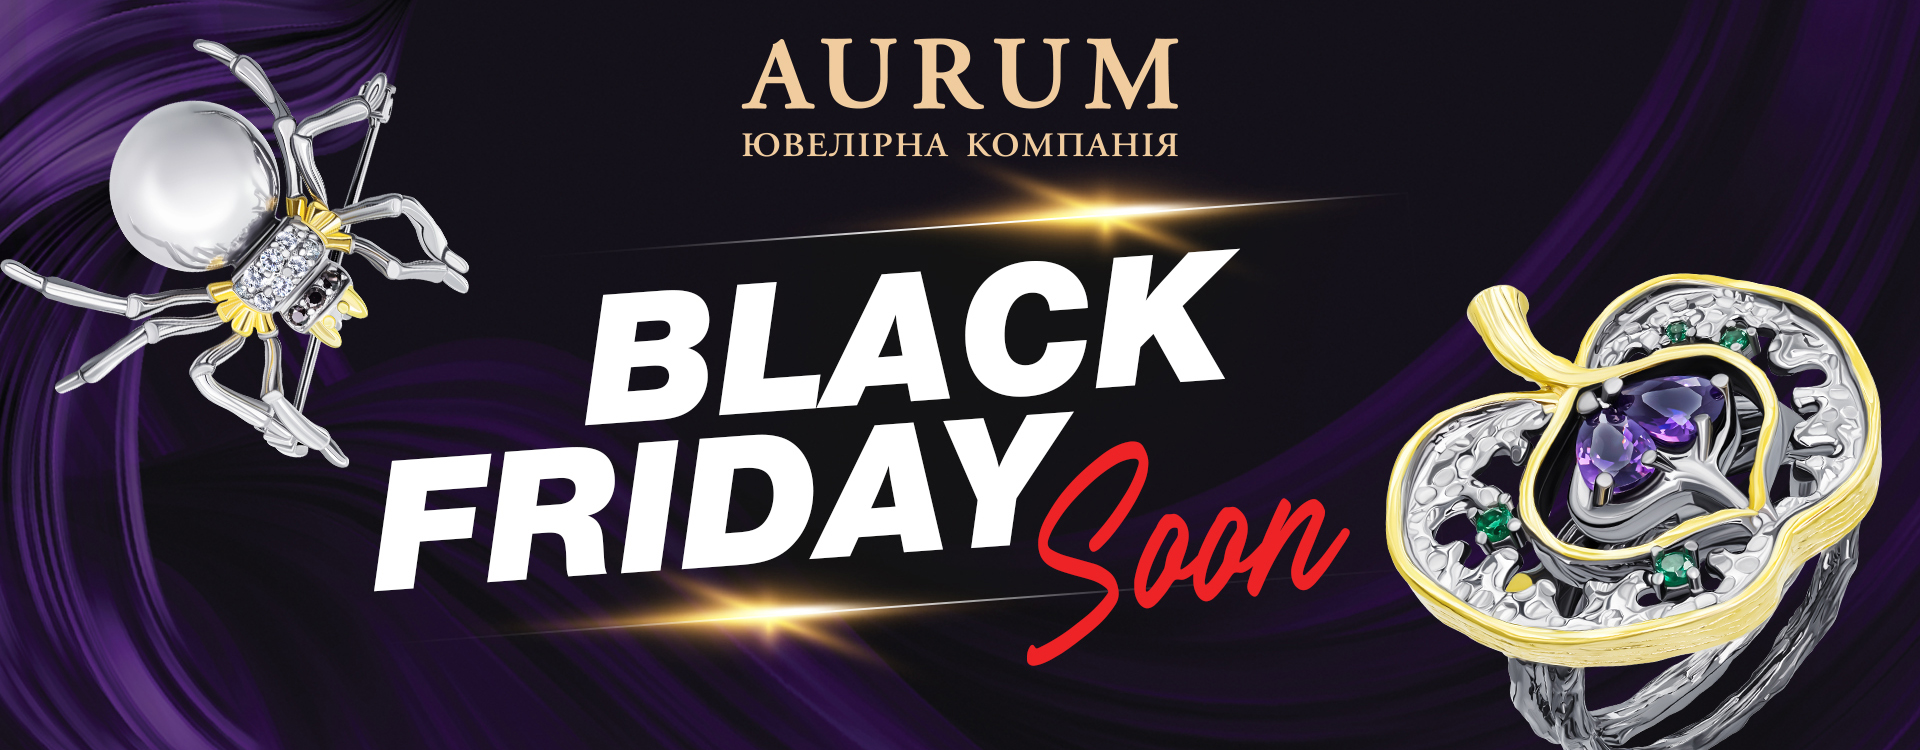 Black Friday soon в 
AURUM